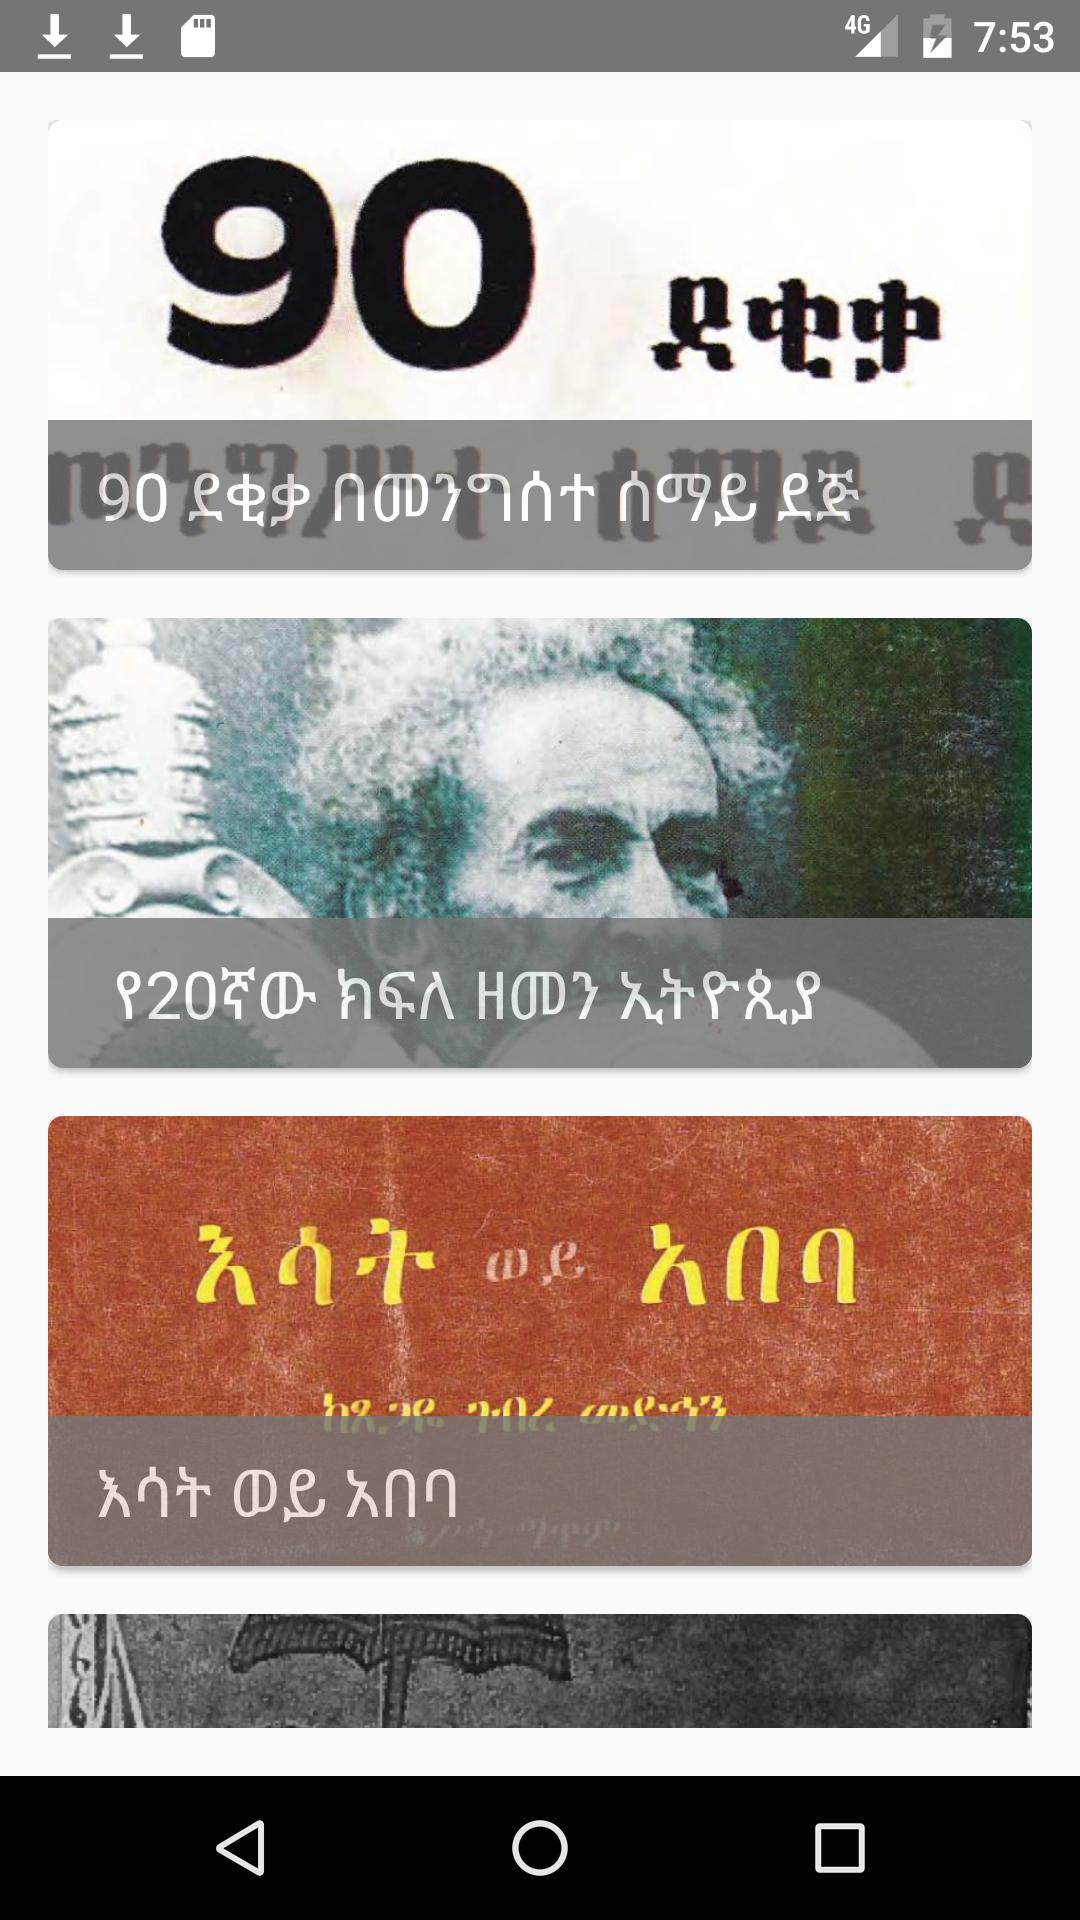 ethiopian history books in amharic pdf free download